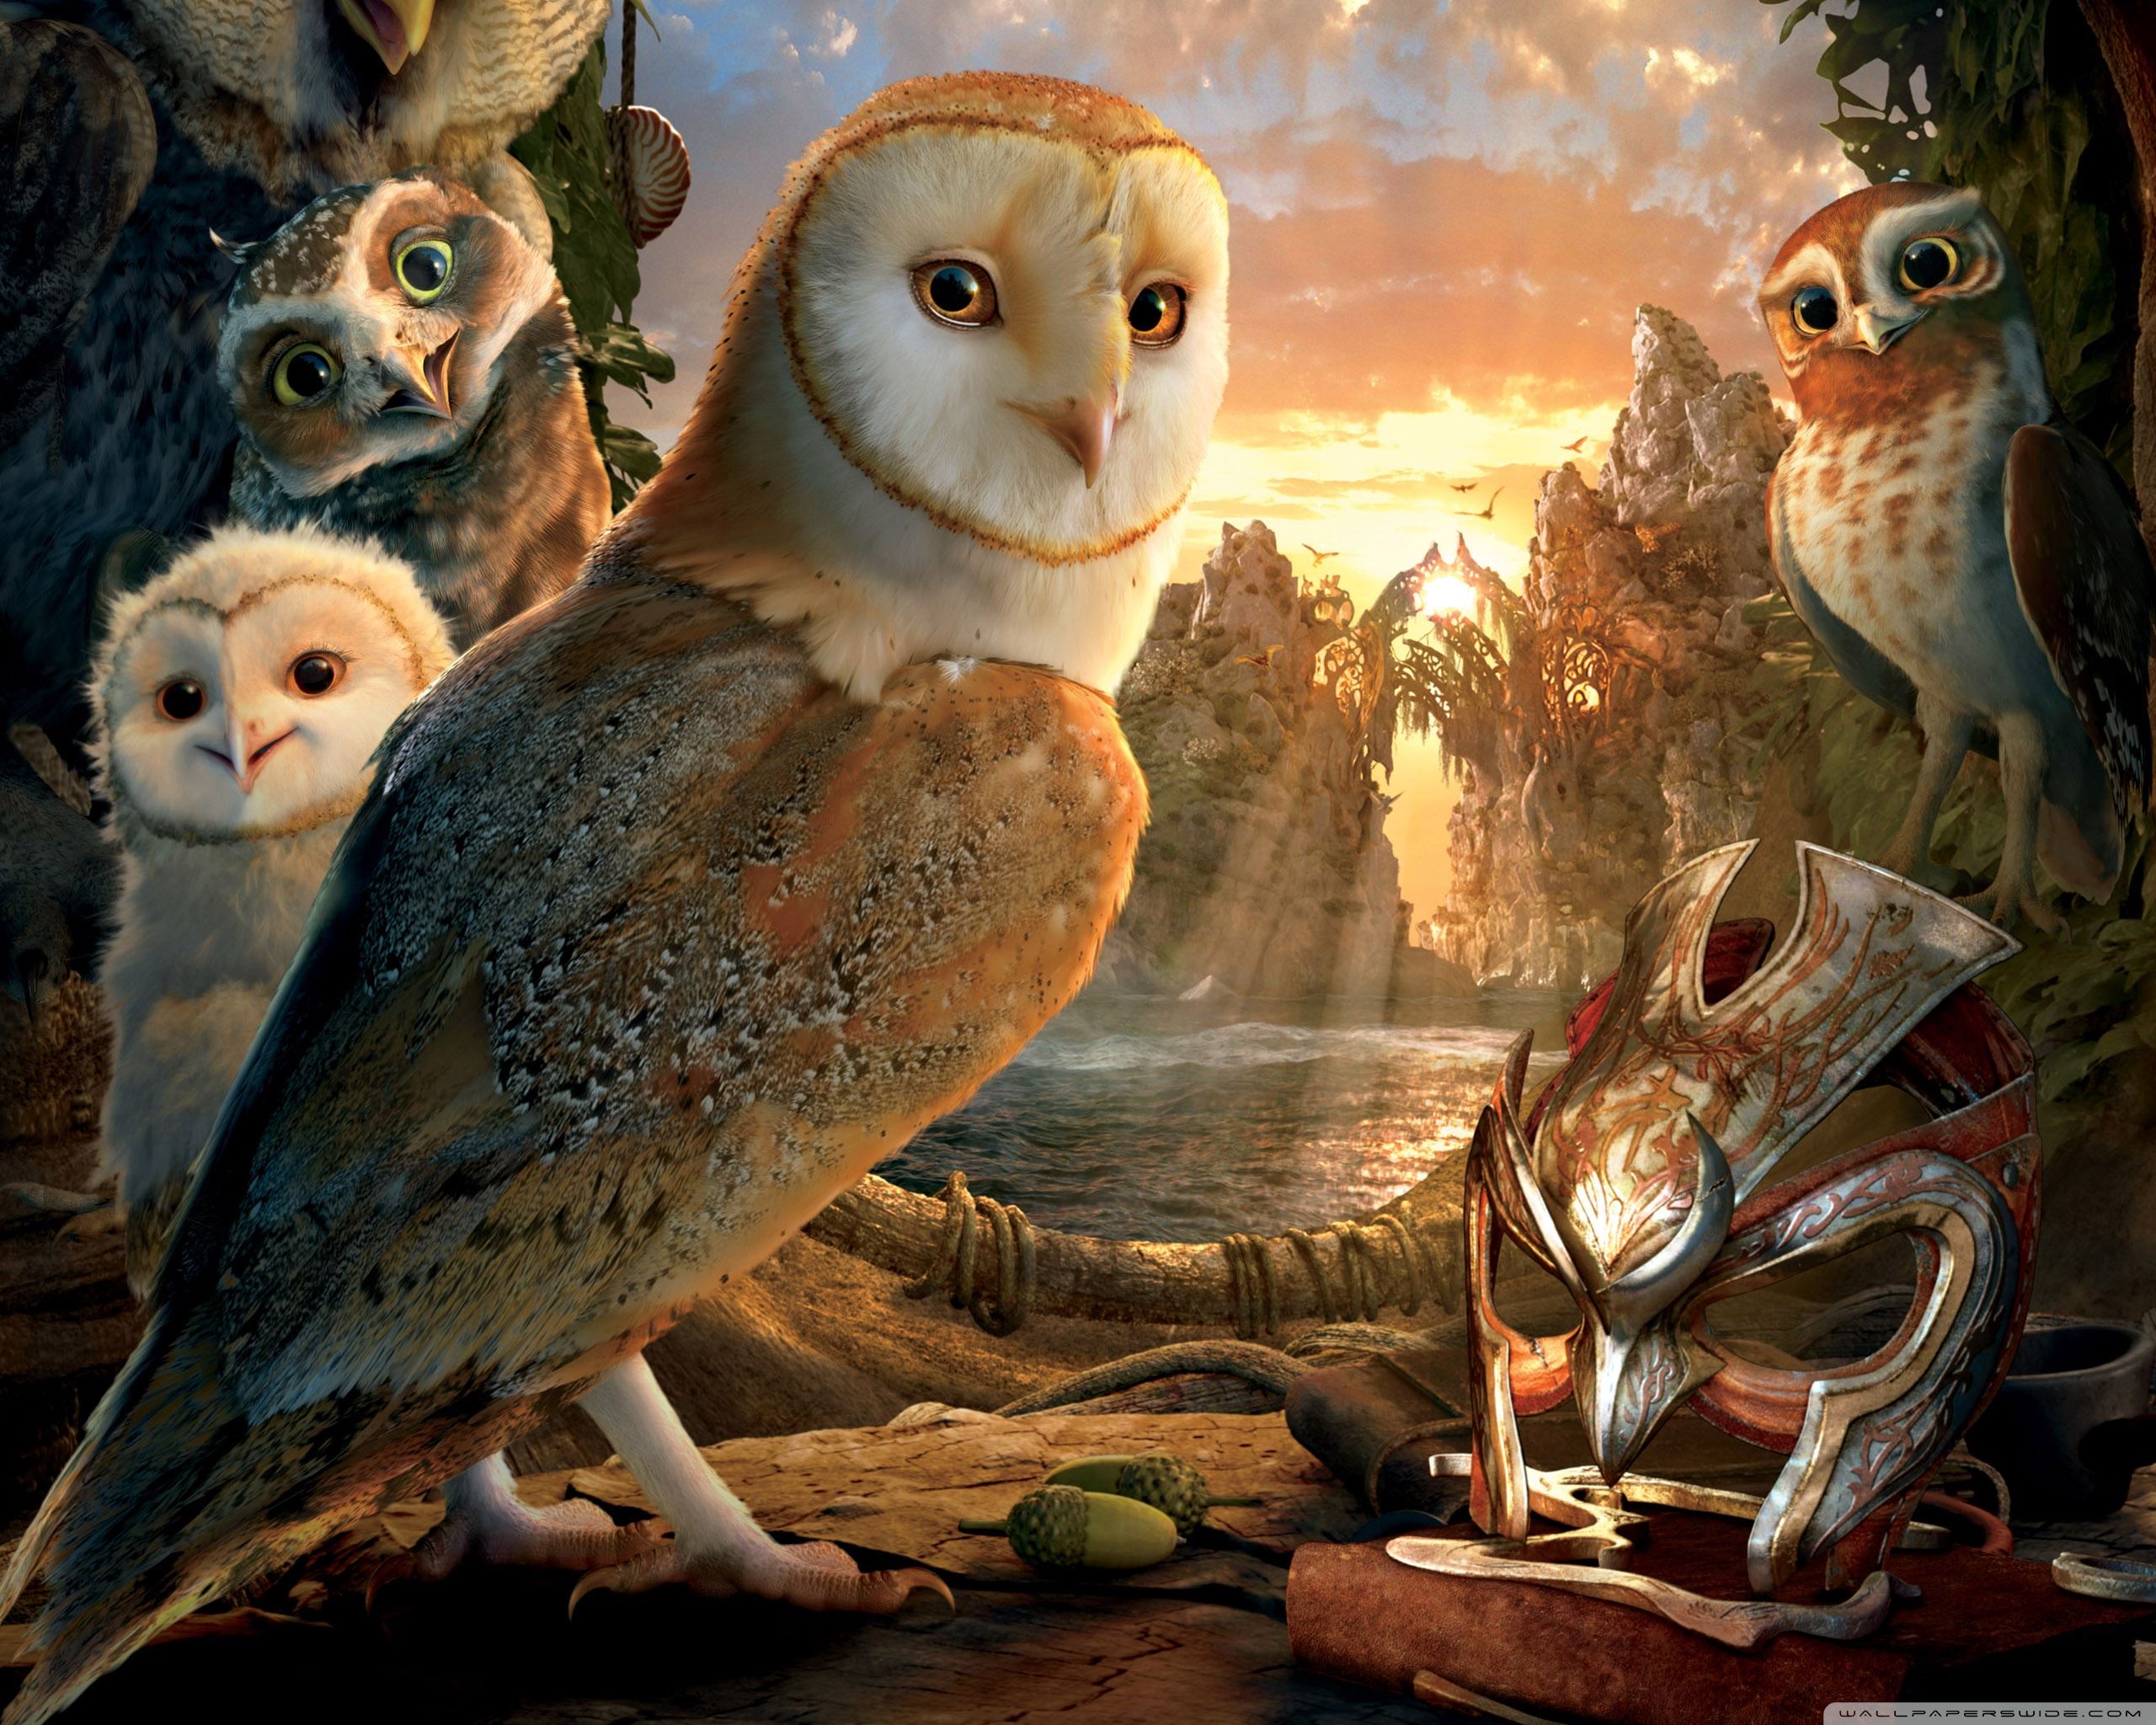 Legend of the Guardians The Owls of Ga'Hoole iPad Air wallpaper 